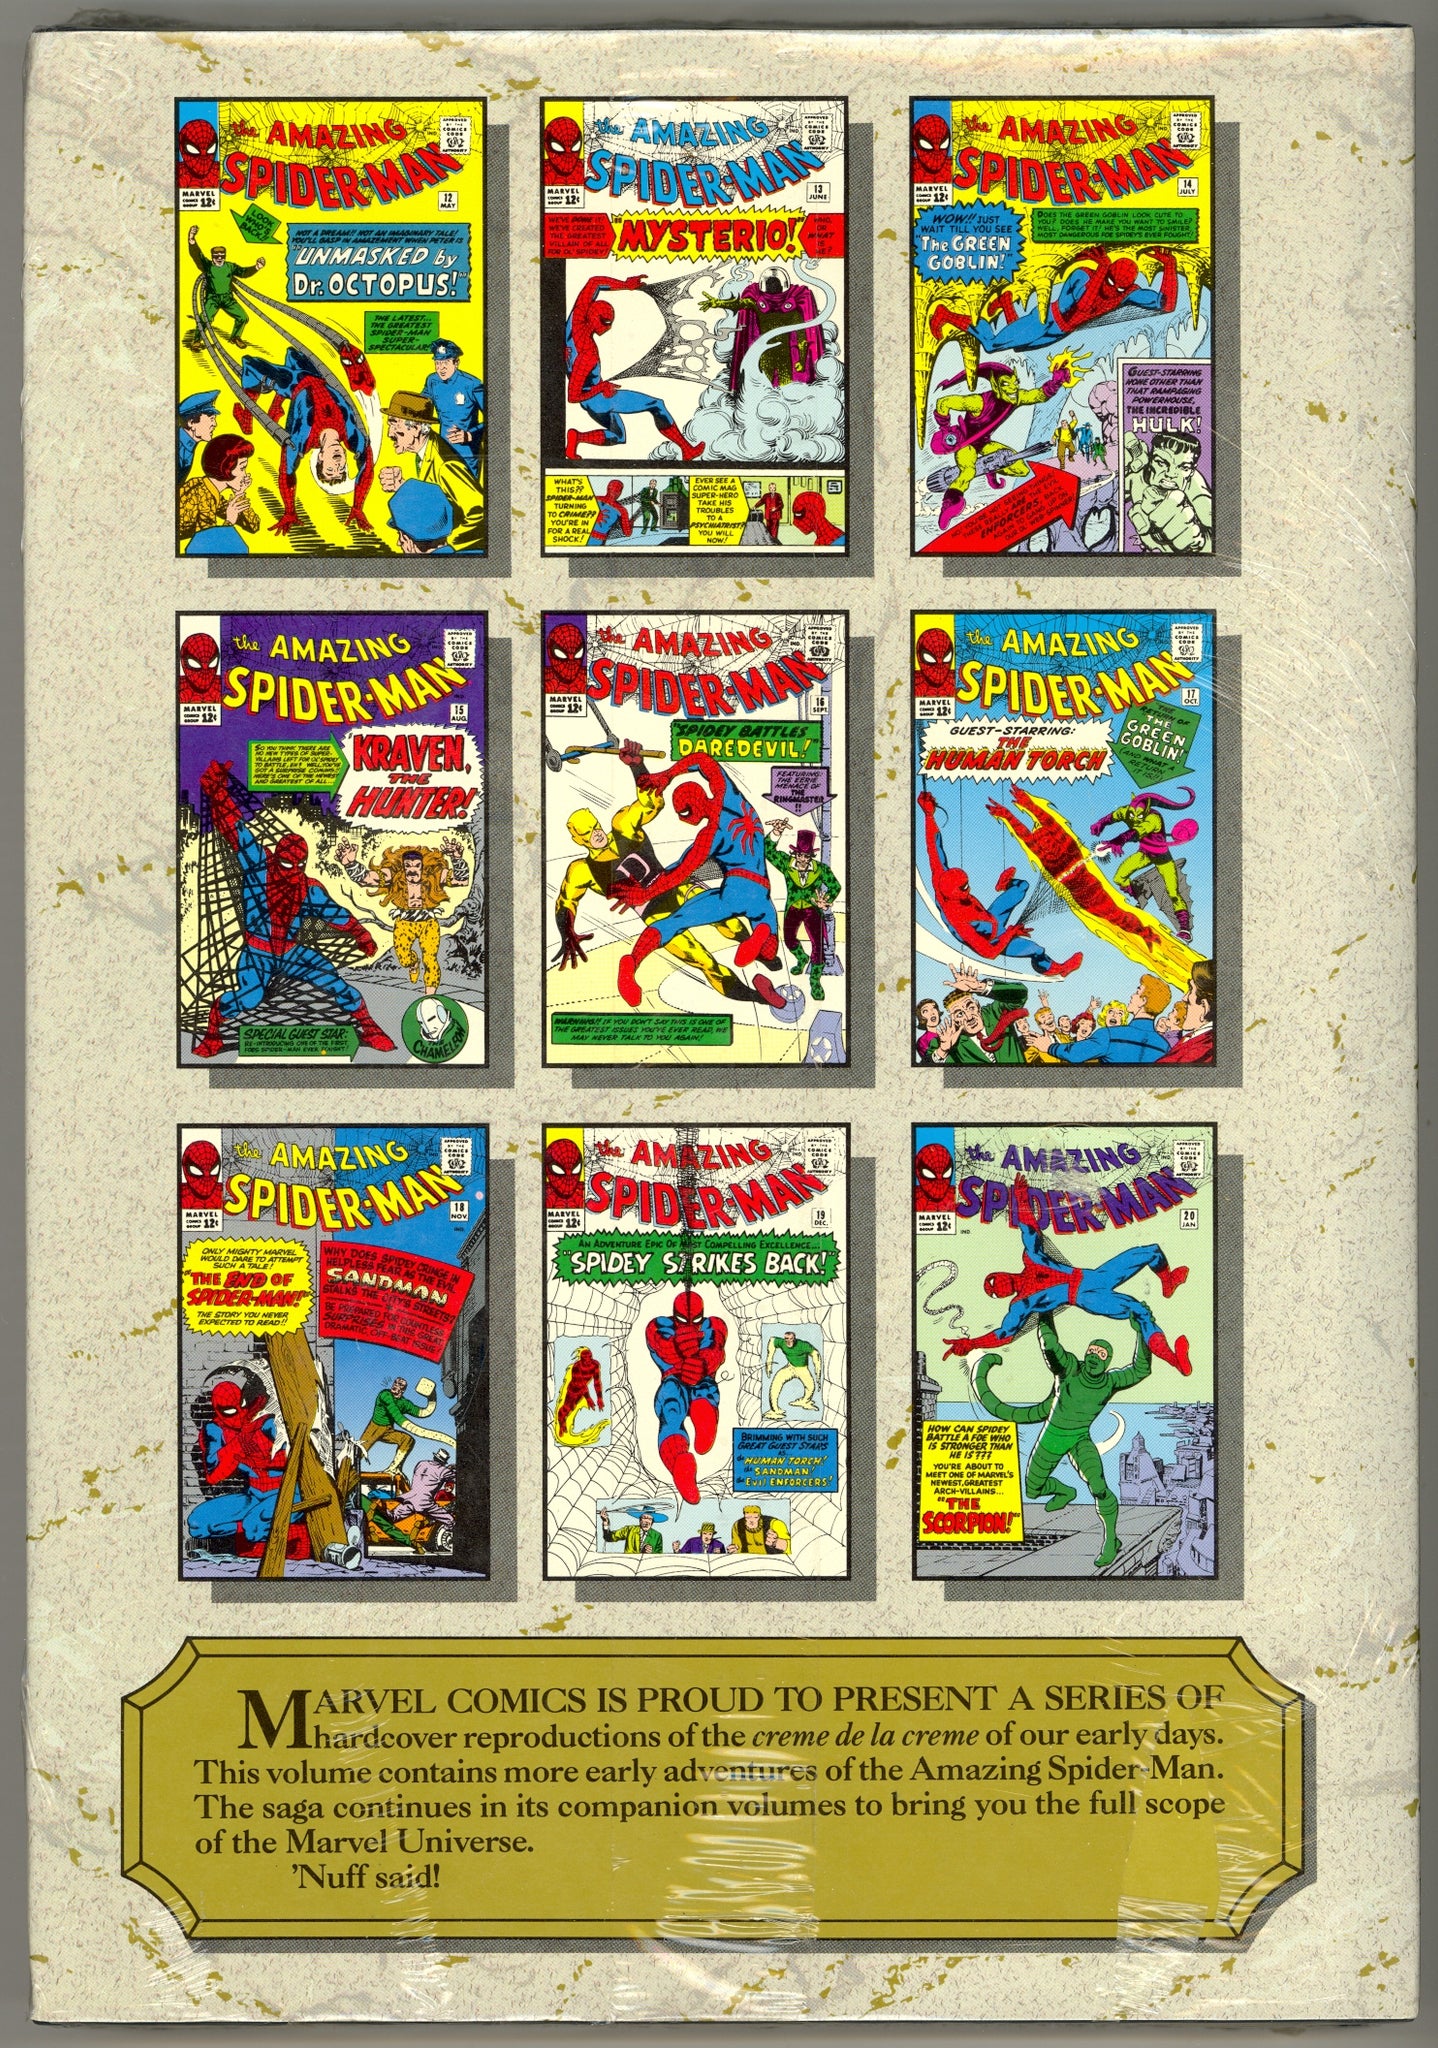 Marvel Masterworks Volume 5, Amazing Spider-Man issues 11-20 - 1st printing